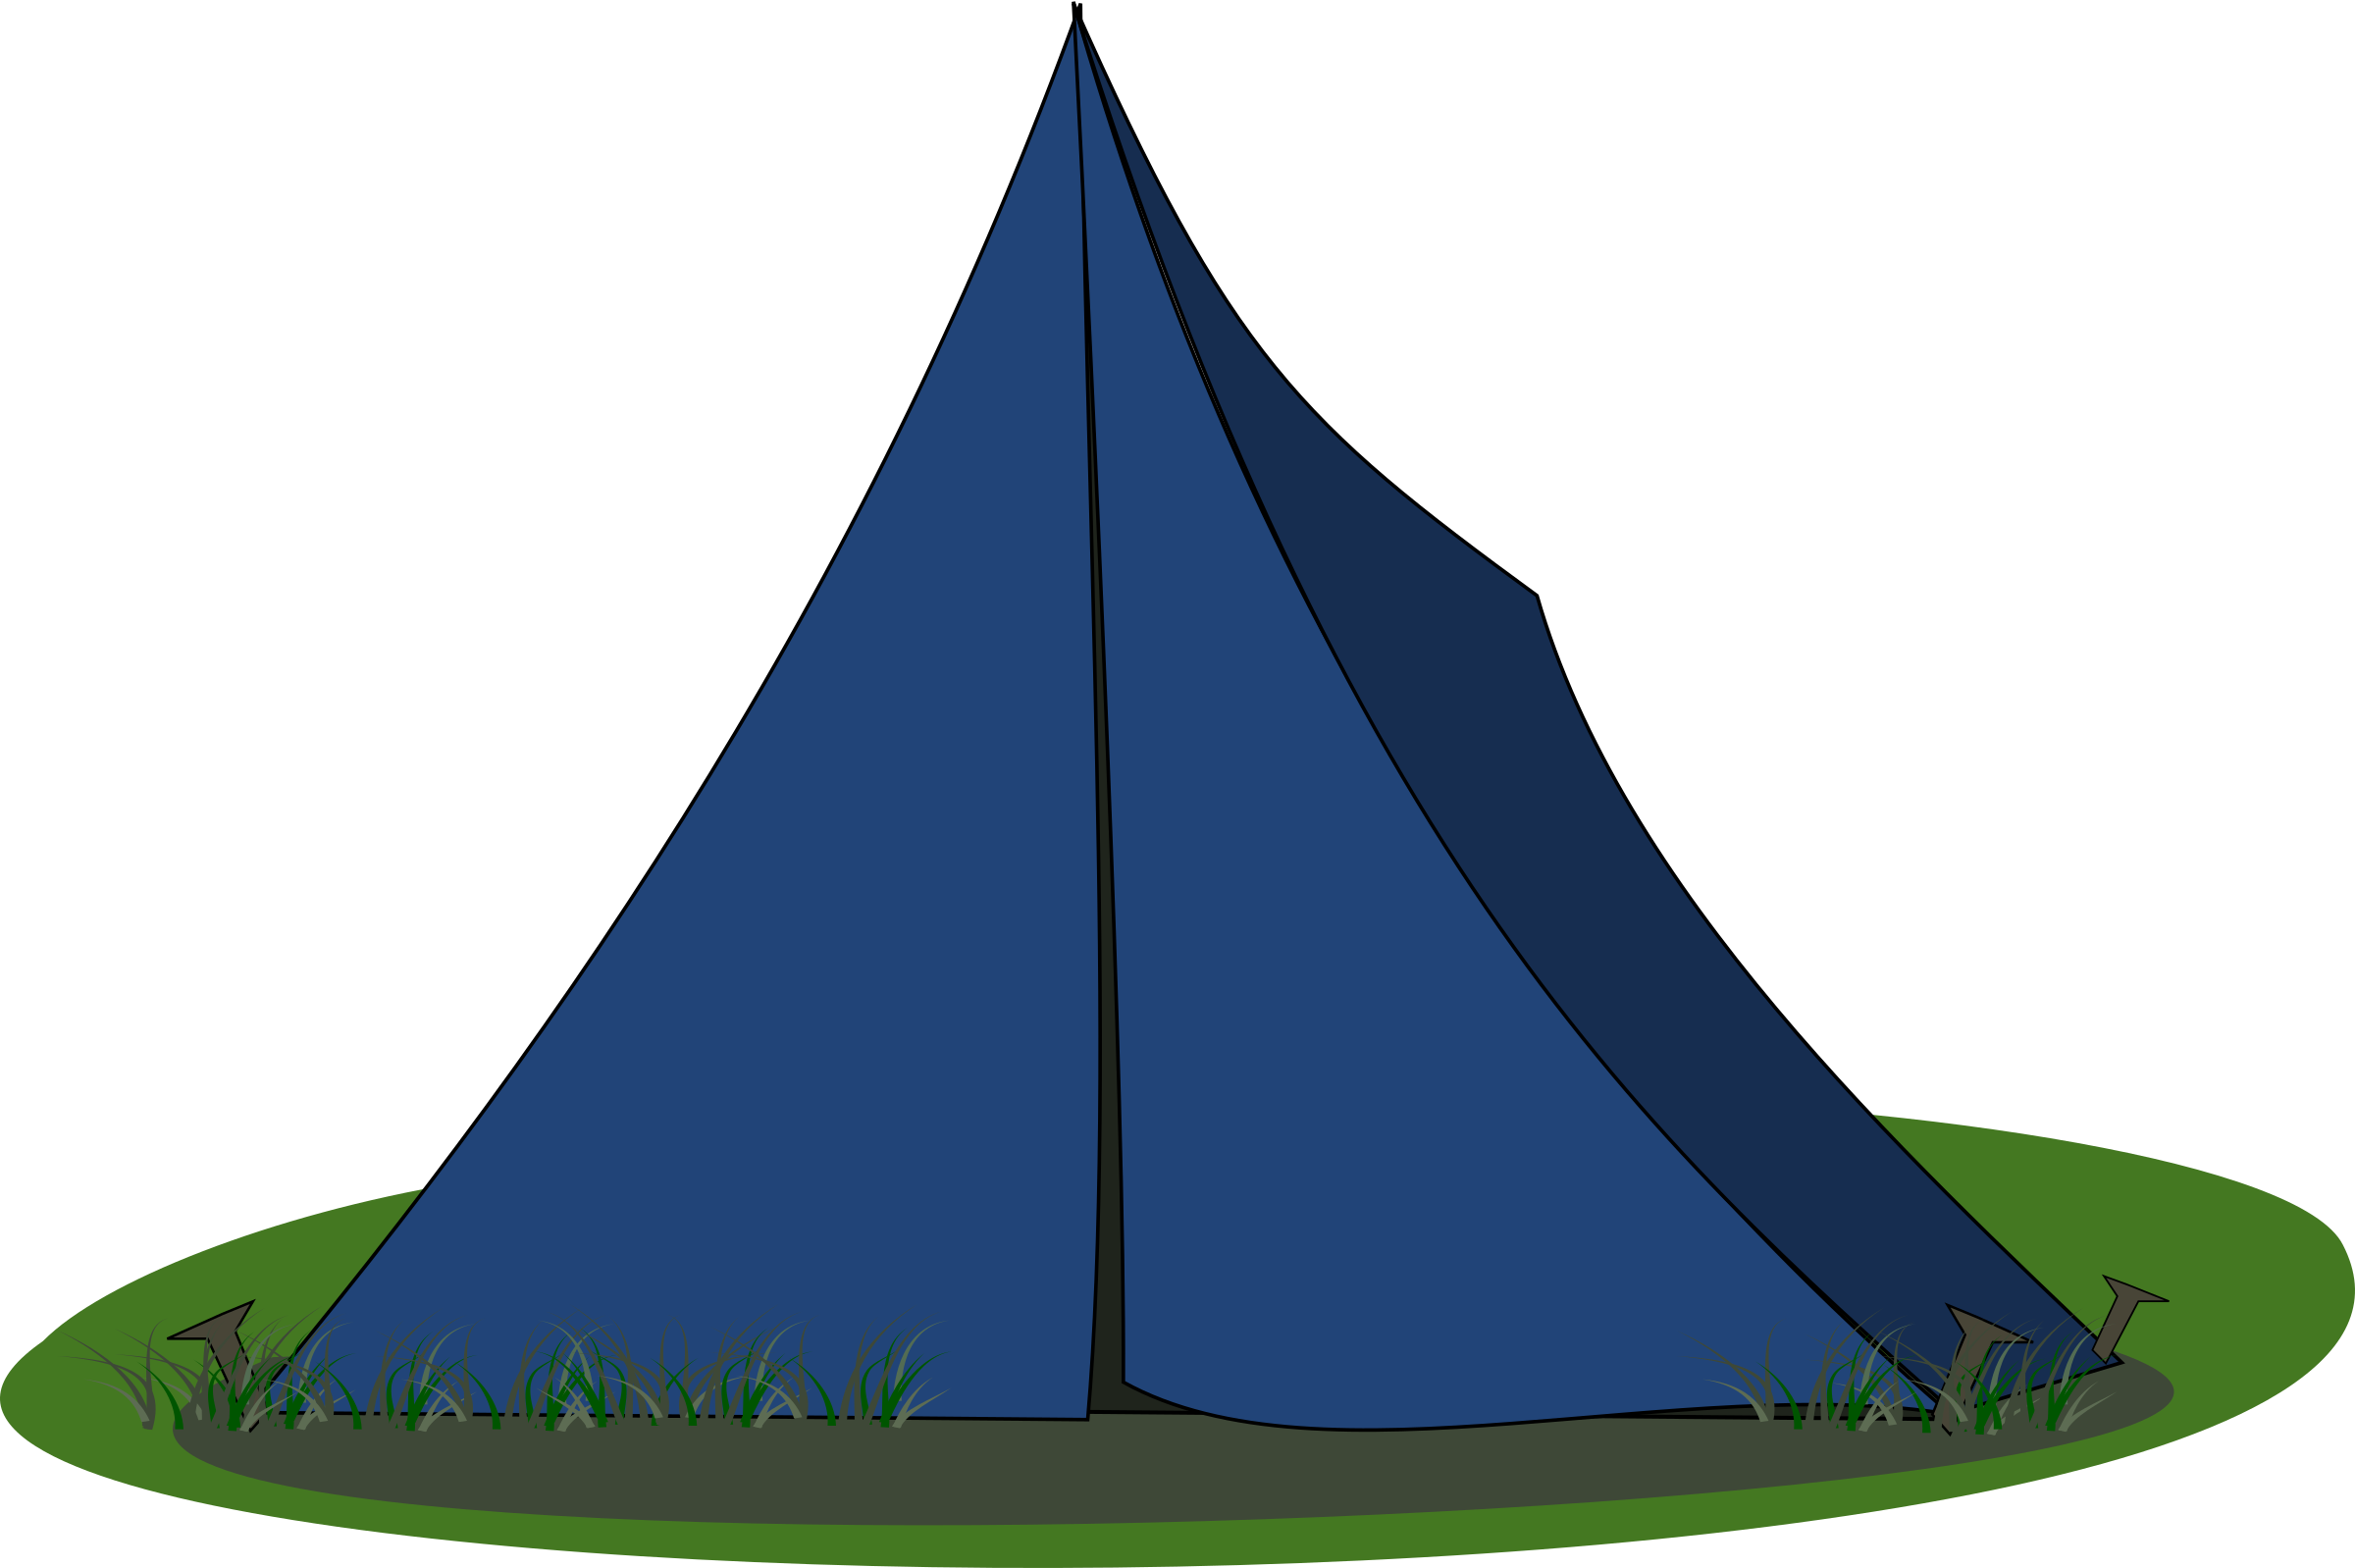 Blue Tent